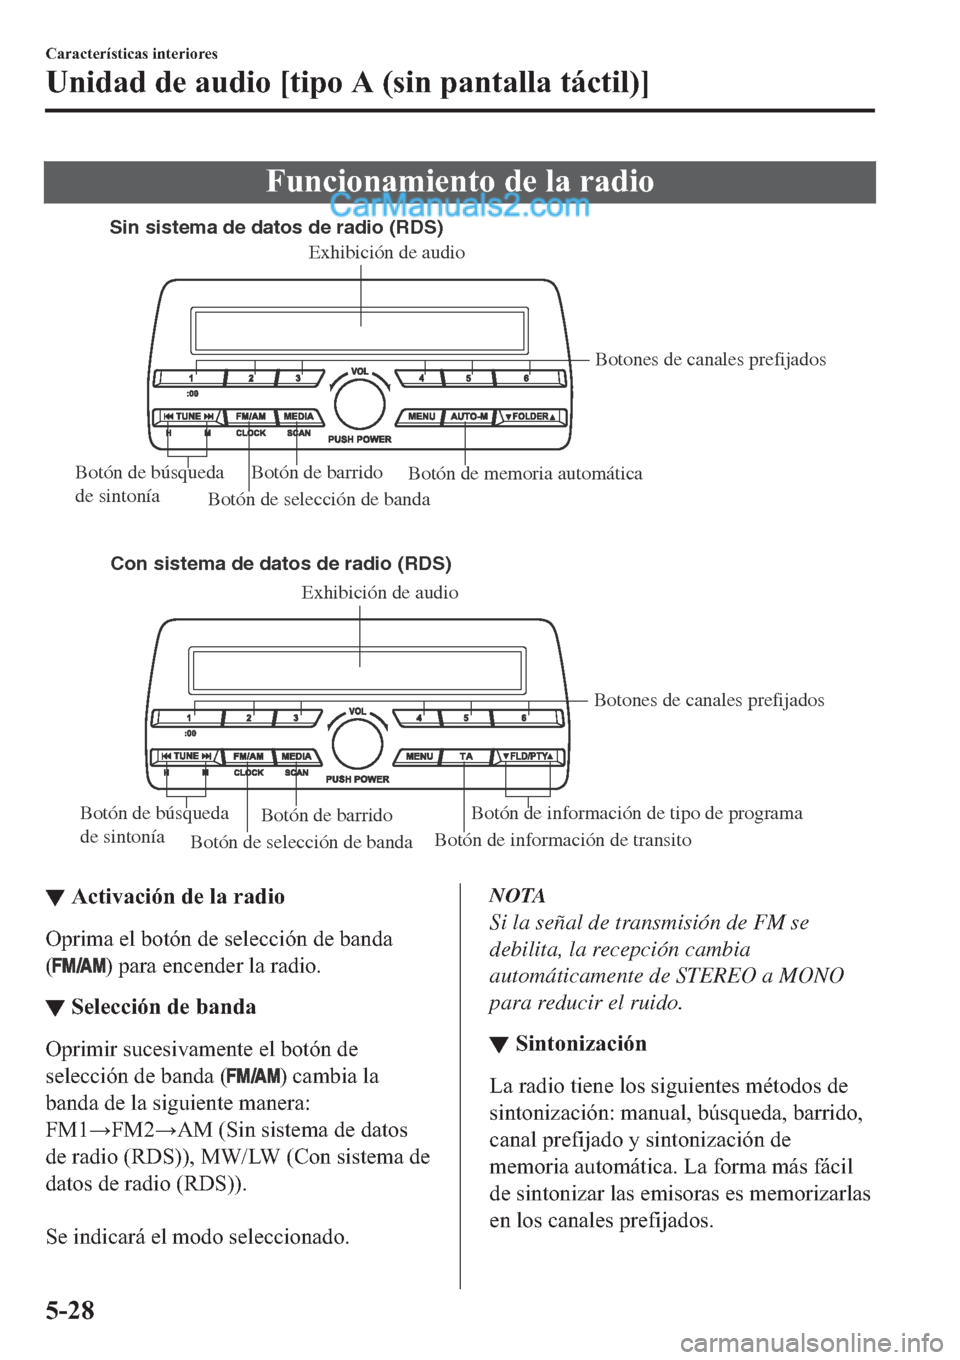 MAZDA MODEL 2 2019  Manual del propietario (in Spanish) �)�X�Q�F�L�R�Q�D�P�L�H�Q�W�R��G�H��O�D��U�D�G�L�R
Sin sistema de datos de radio (RDS)
Con sistema de datos de radio (RDS)
Botón de selección de bandaBotón de información de transitoBotones de c